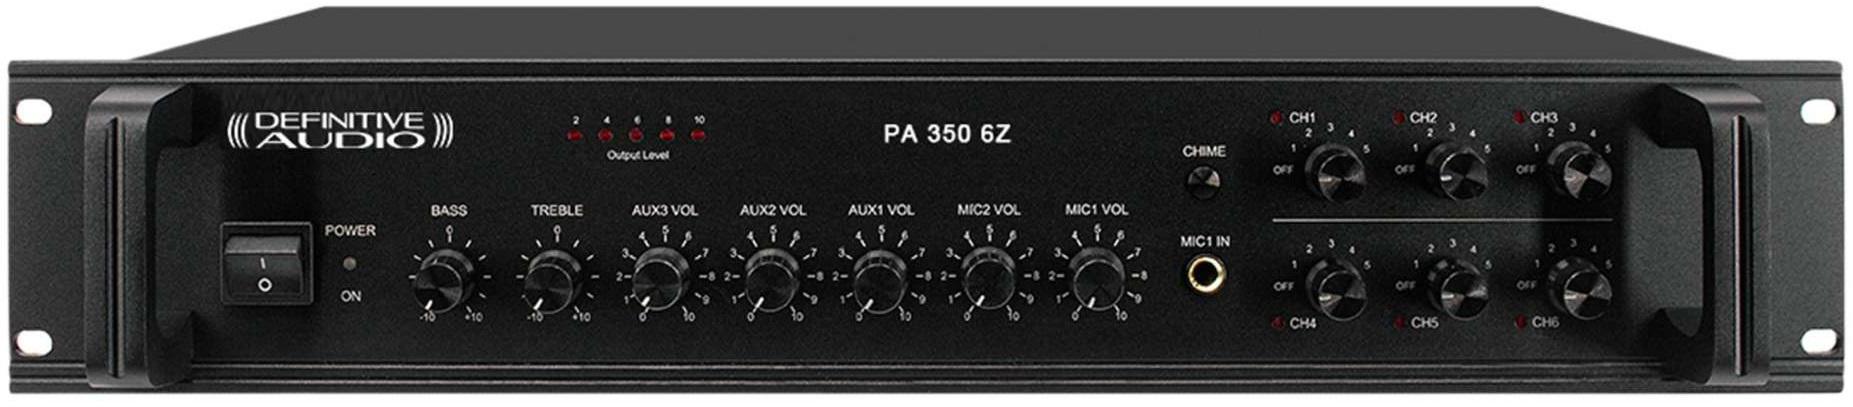 Ampli puissance sono multi-canaux Definitive audio PA 350 6Z